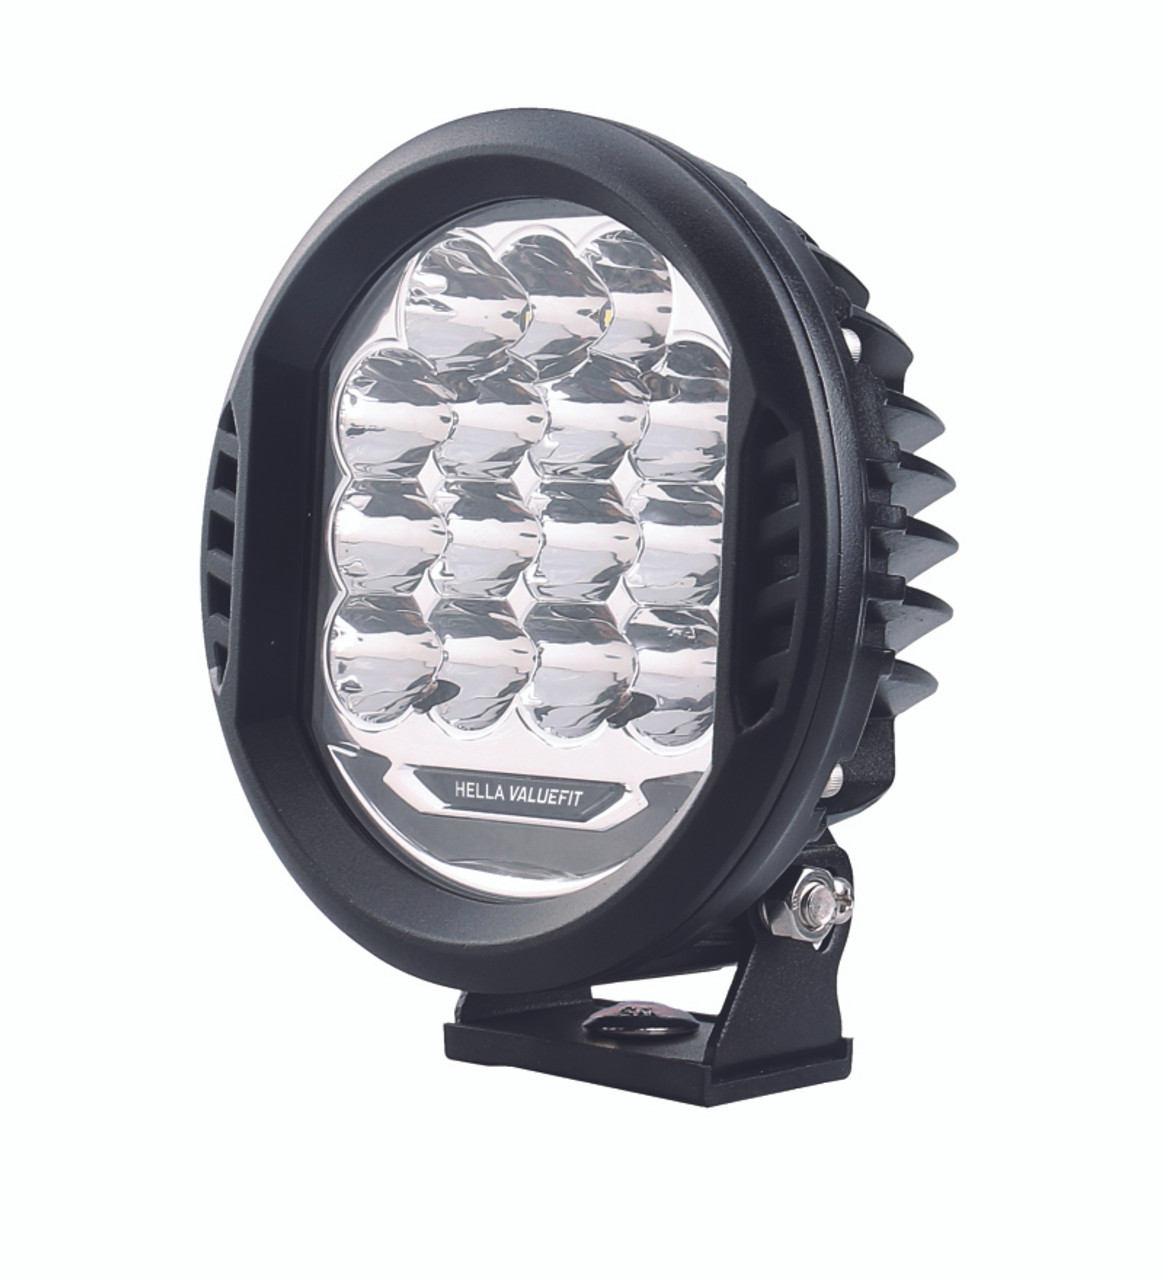 HELLA 358117171 ValueFit 500 LED Driving Lamp Kit, 2 Pack, Black